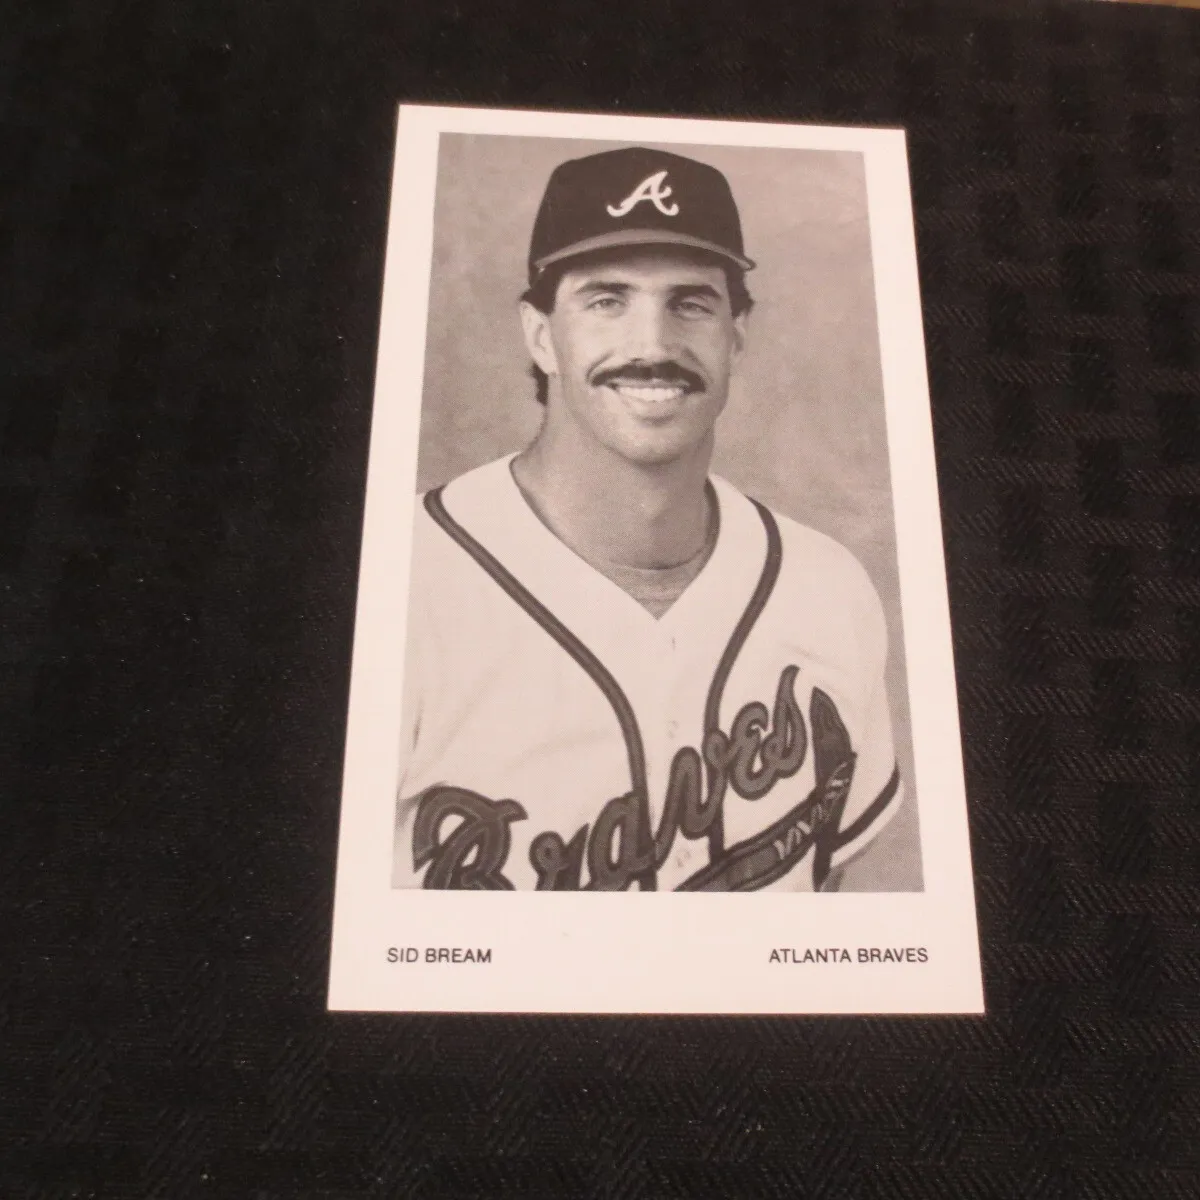 1991 or 1992 Atlanta Braves Team Issue Sid Bream